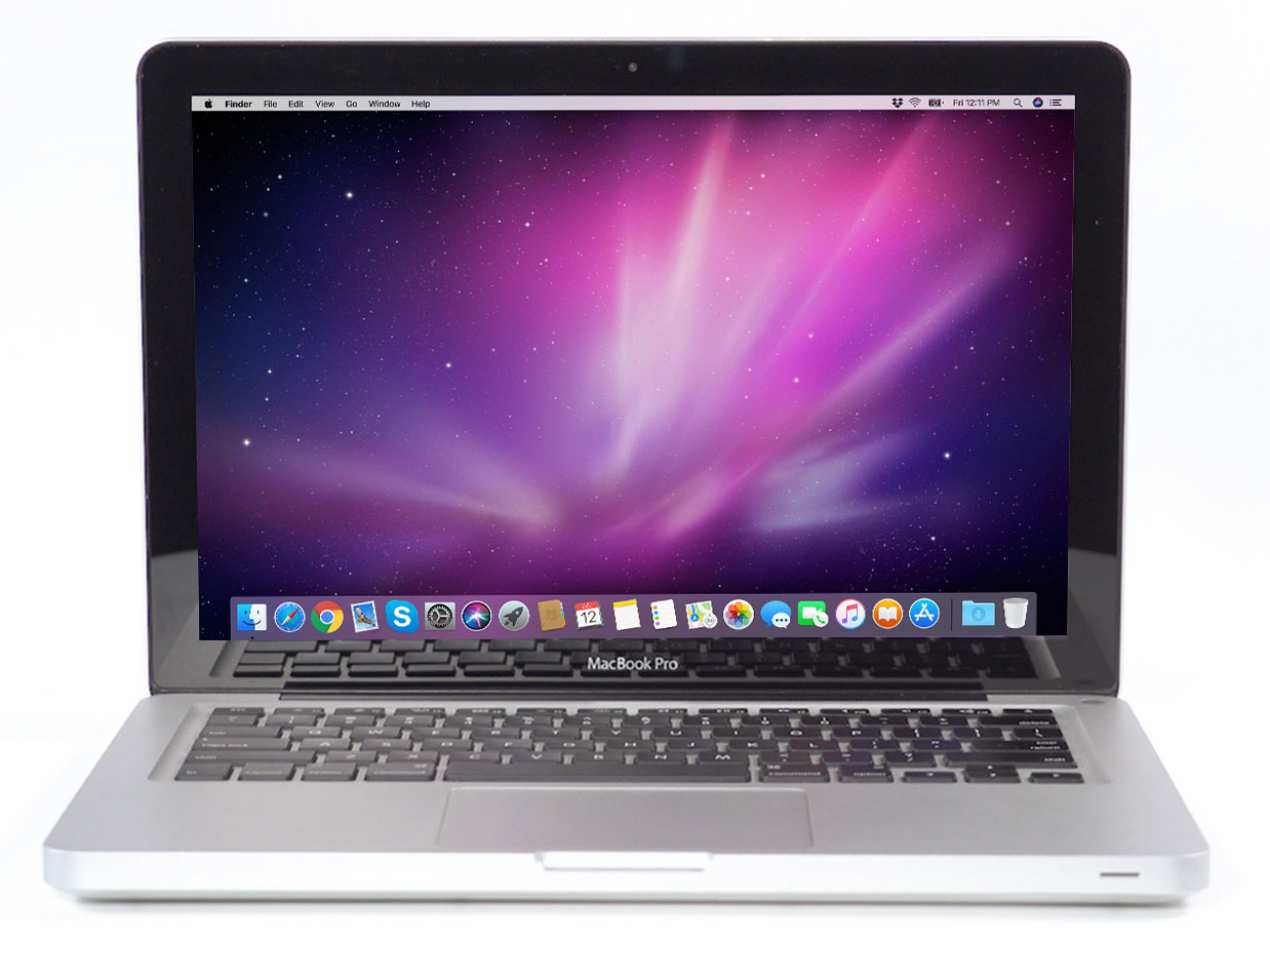 Apple MacBook Pro (15-inch Late 2011) 2.2 GHz intel i7-2675QM 8GB RAM